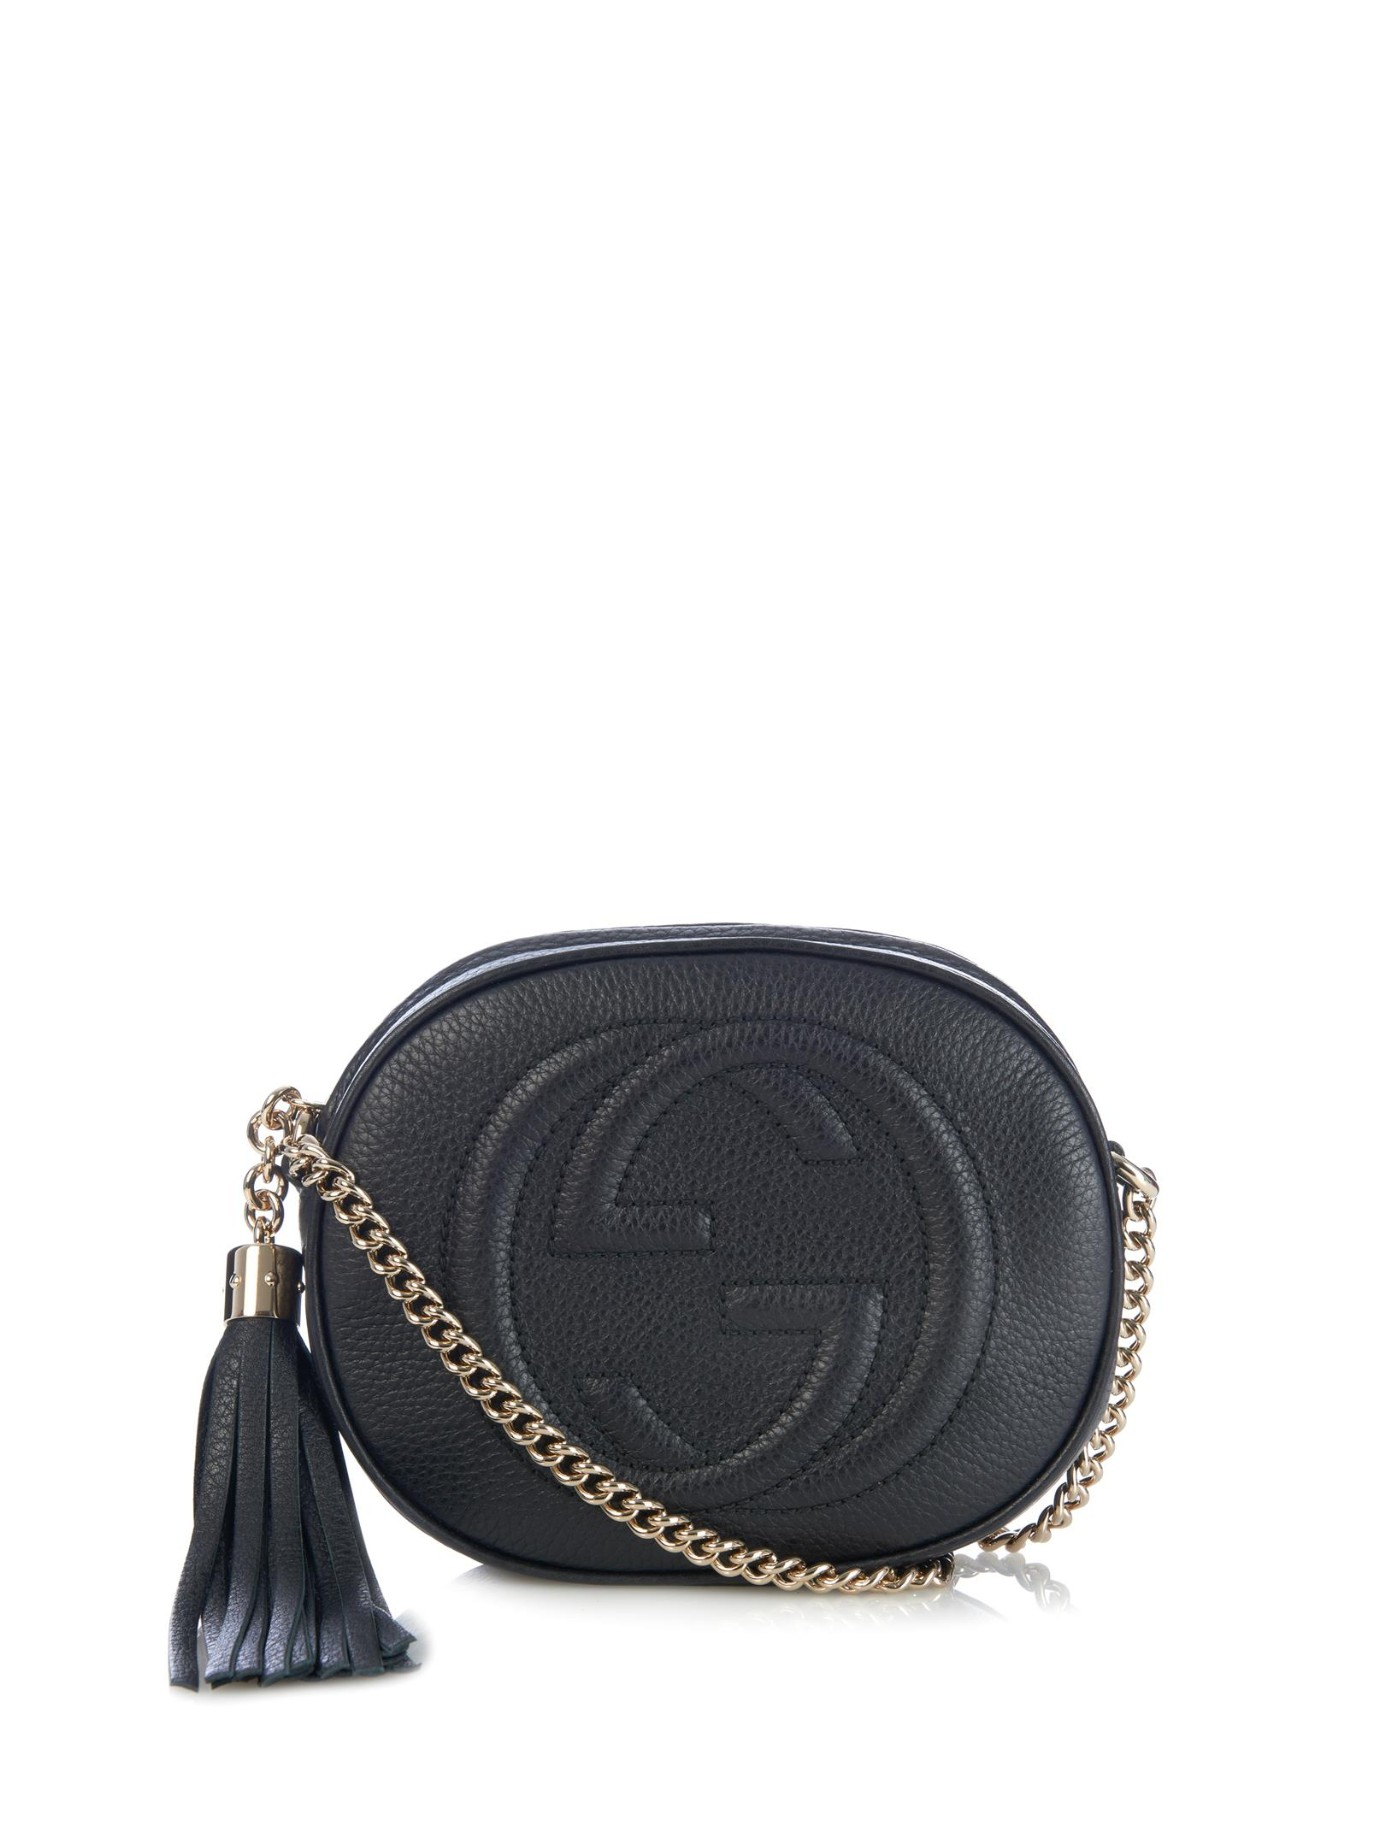 Gucci Mini Soho Chain-Strap Cross-Body Bag in Black | Lyst